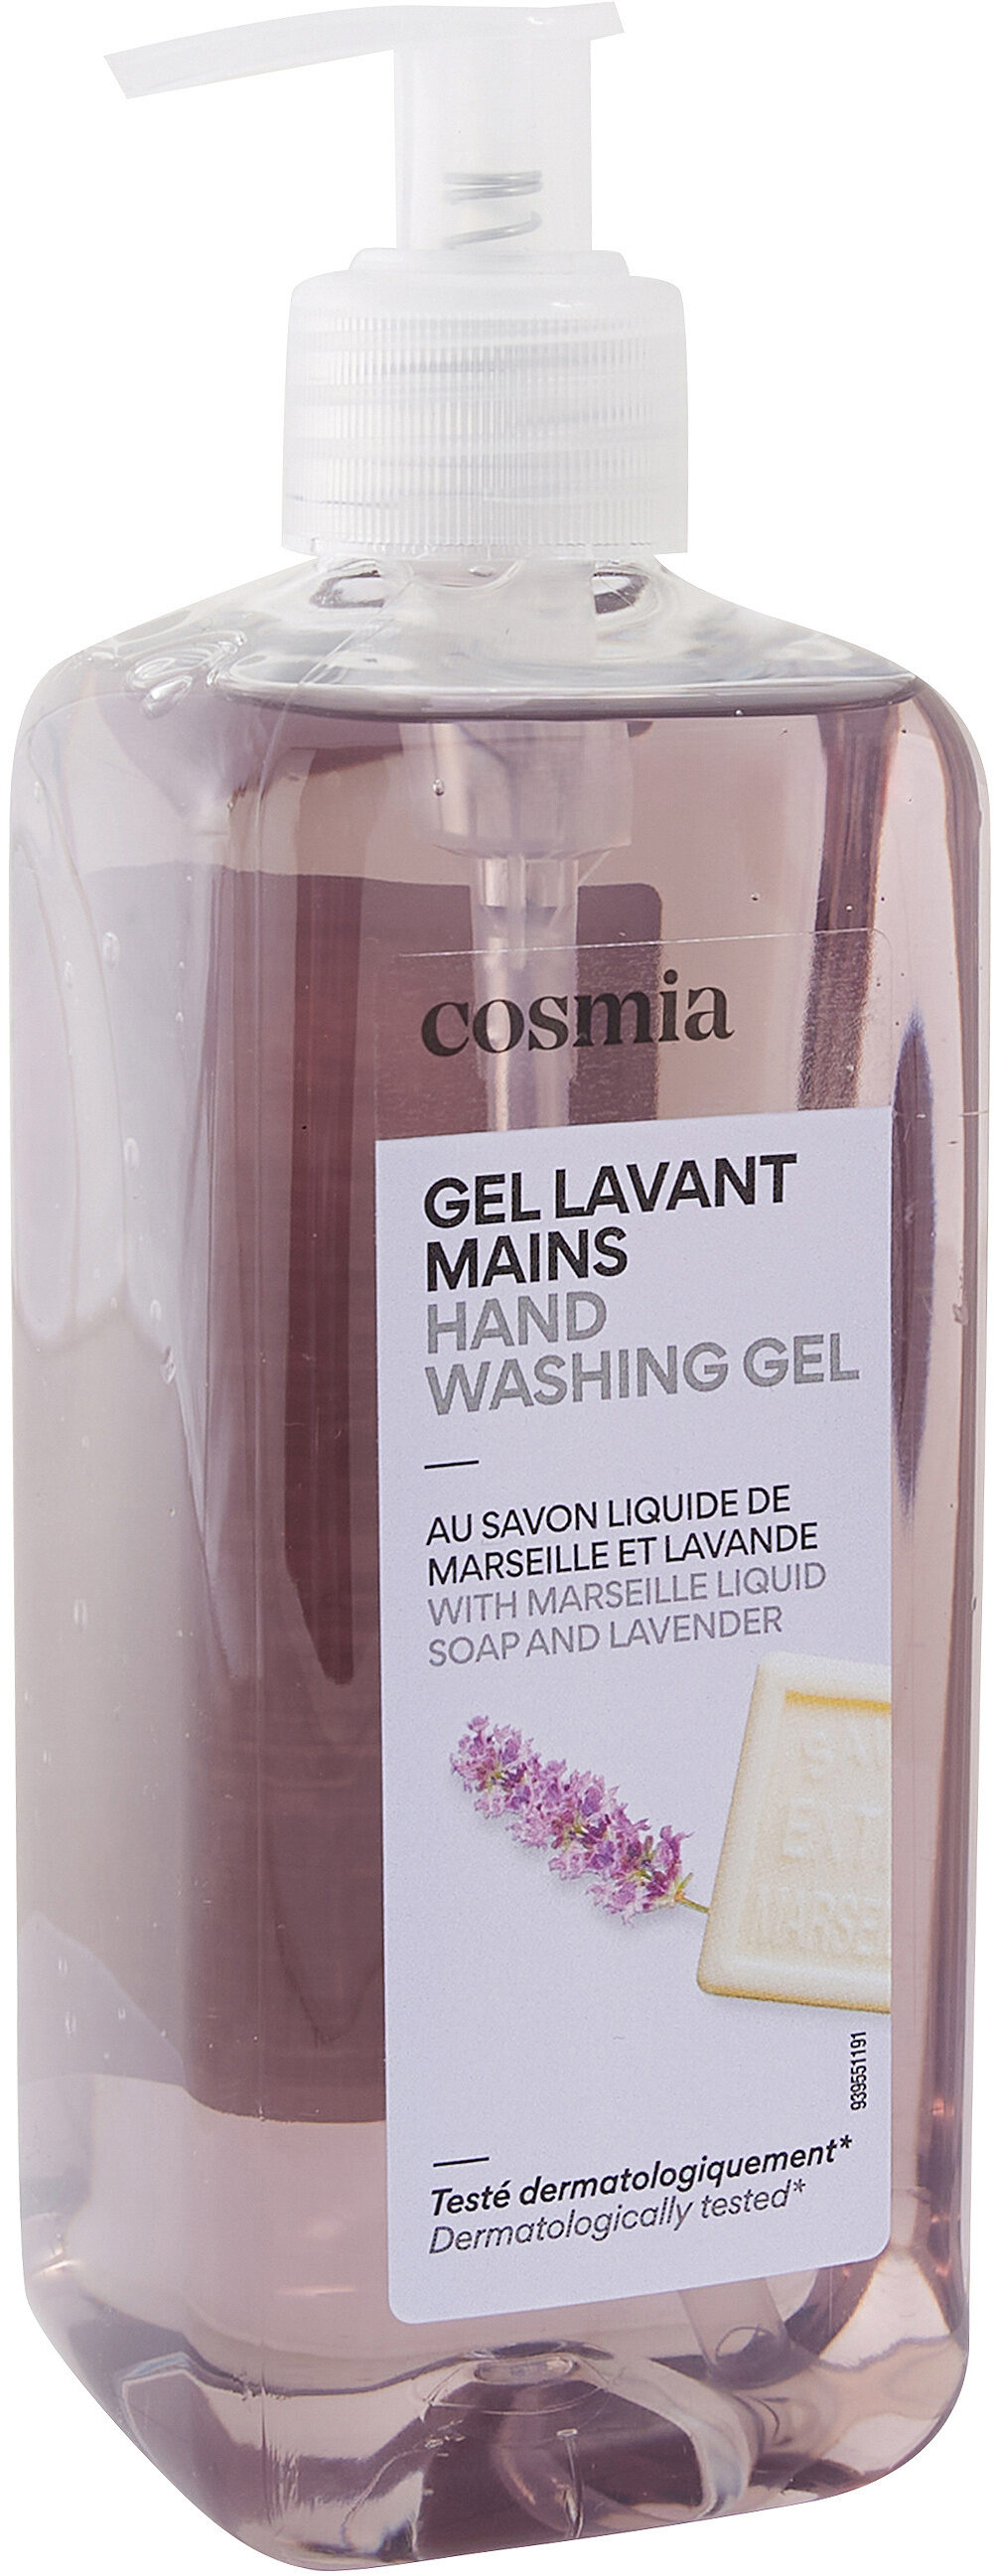 Cosmia savon main marseille et lavande 500 ml - מוצר - fr